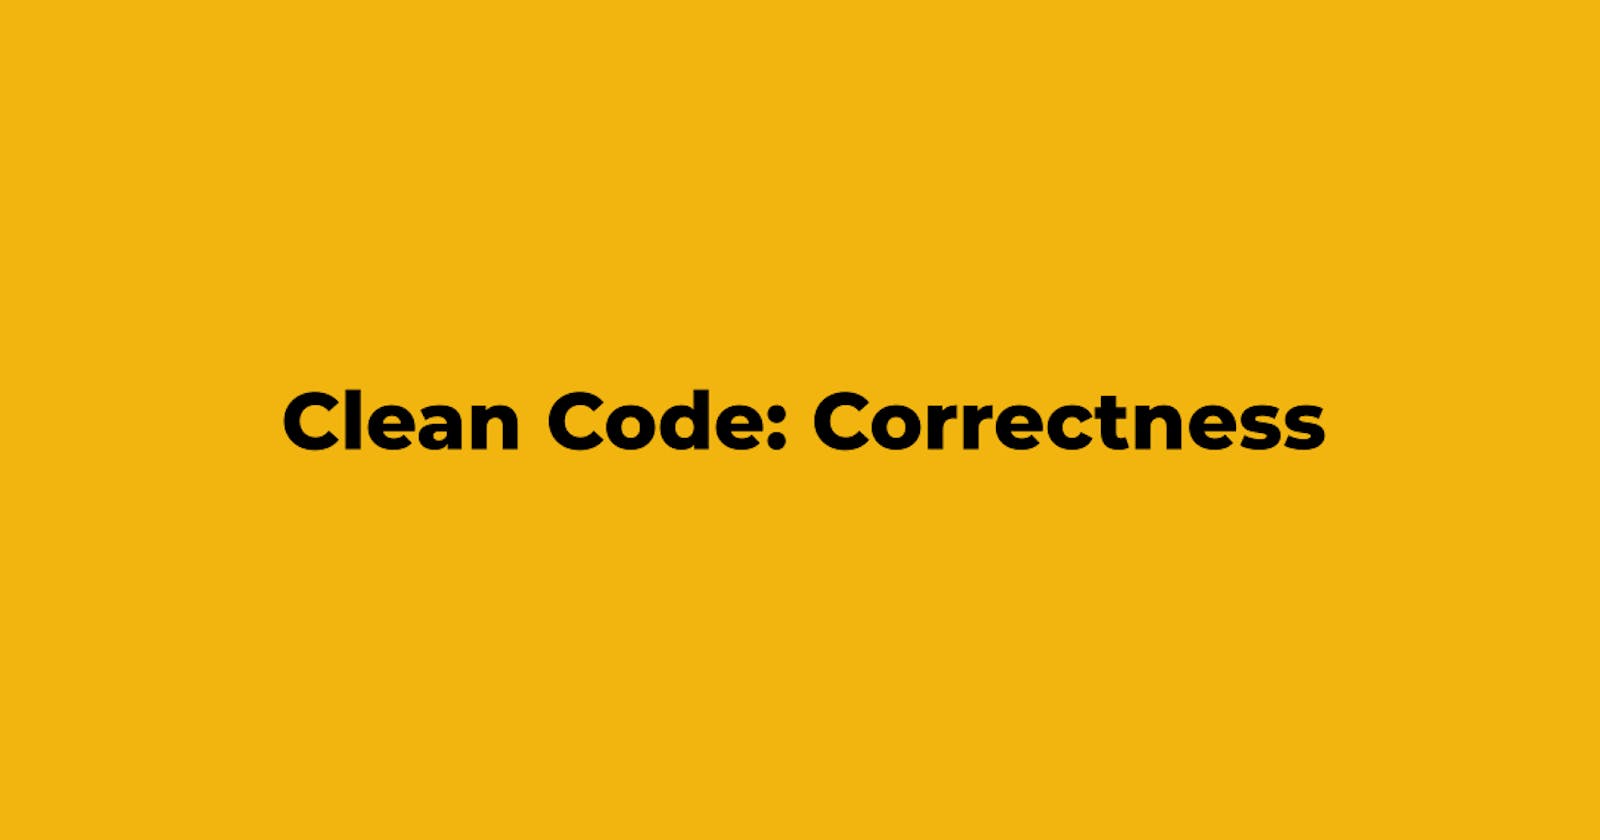 Clean Code: Correctness